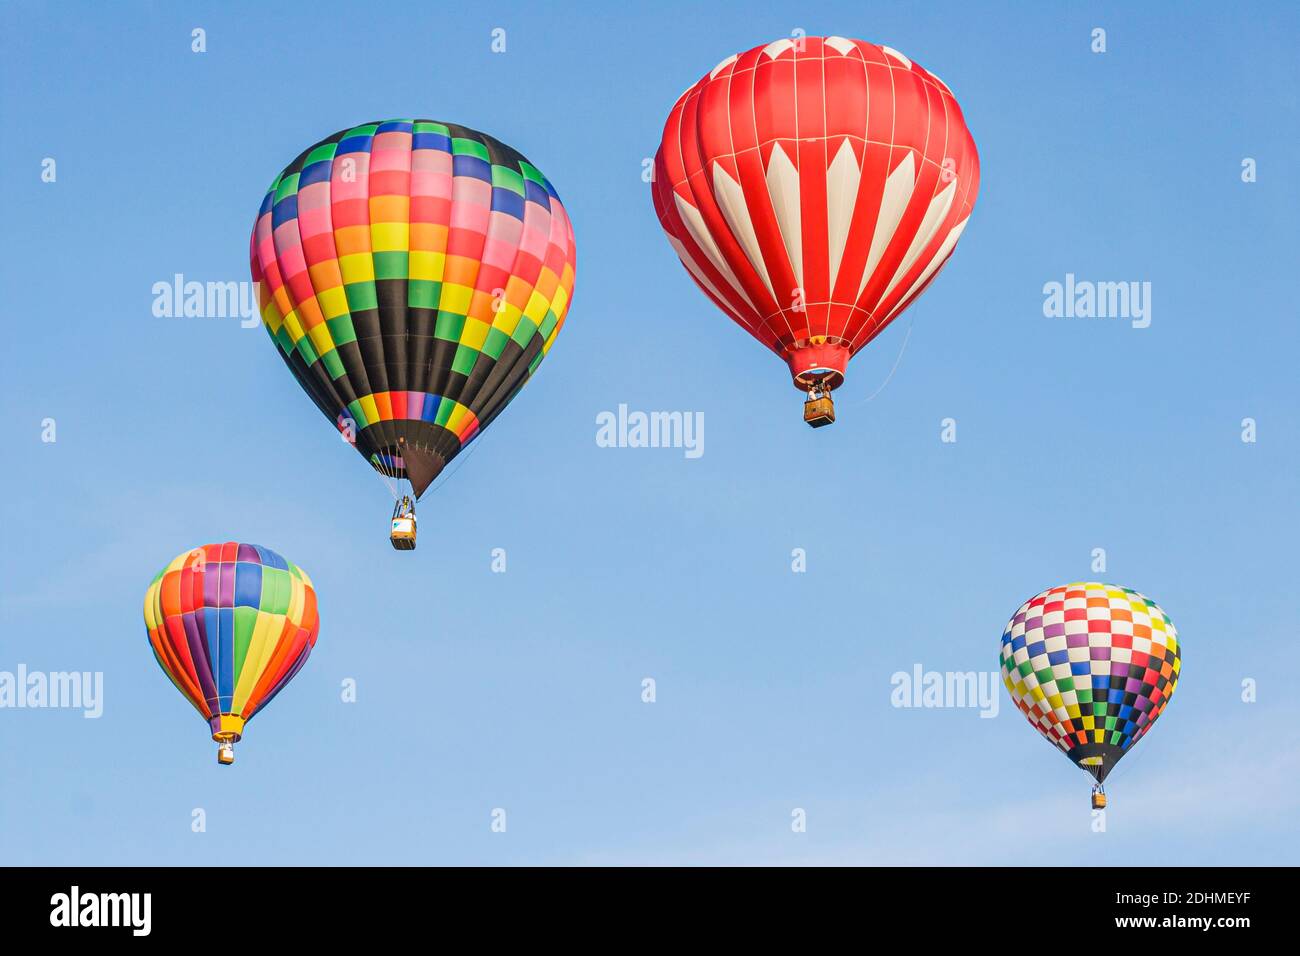 Alabama Decatur Alabama Jubilee Hot Air Balloon Classic,Point Mallard Park balloons annual taking off rising multiple, Stock Photo